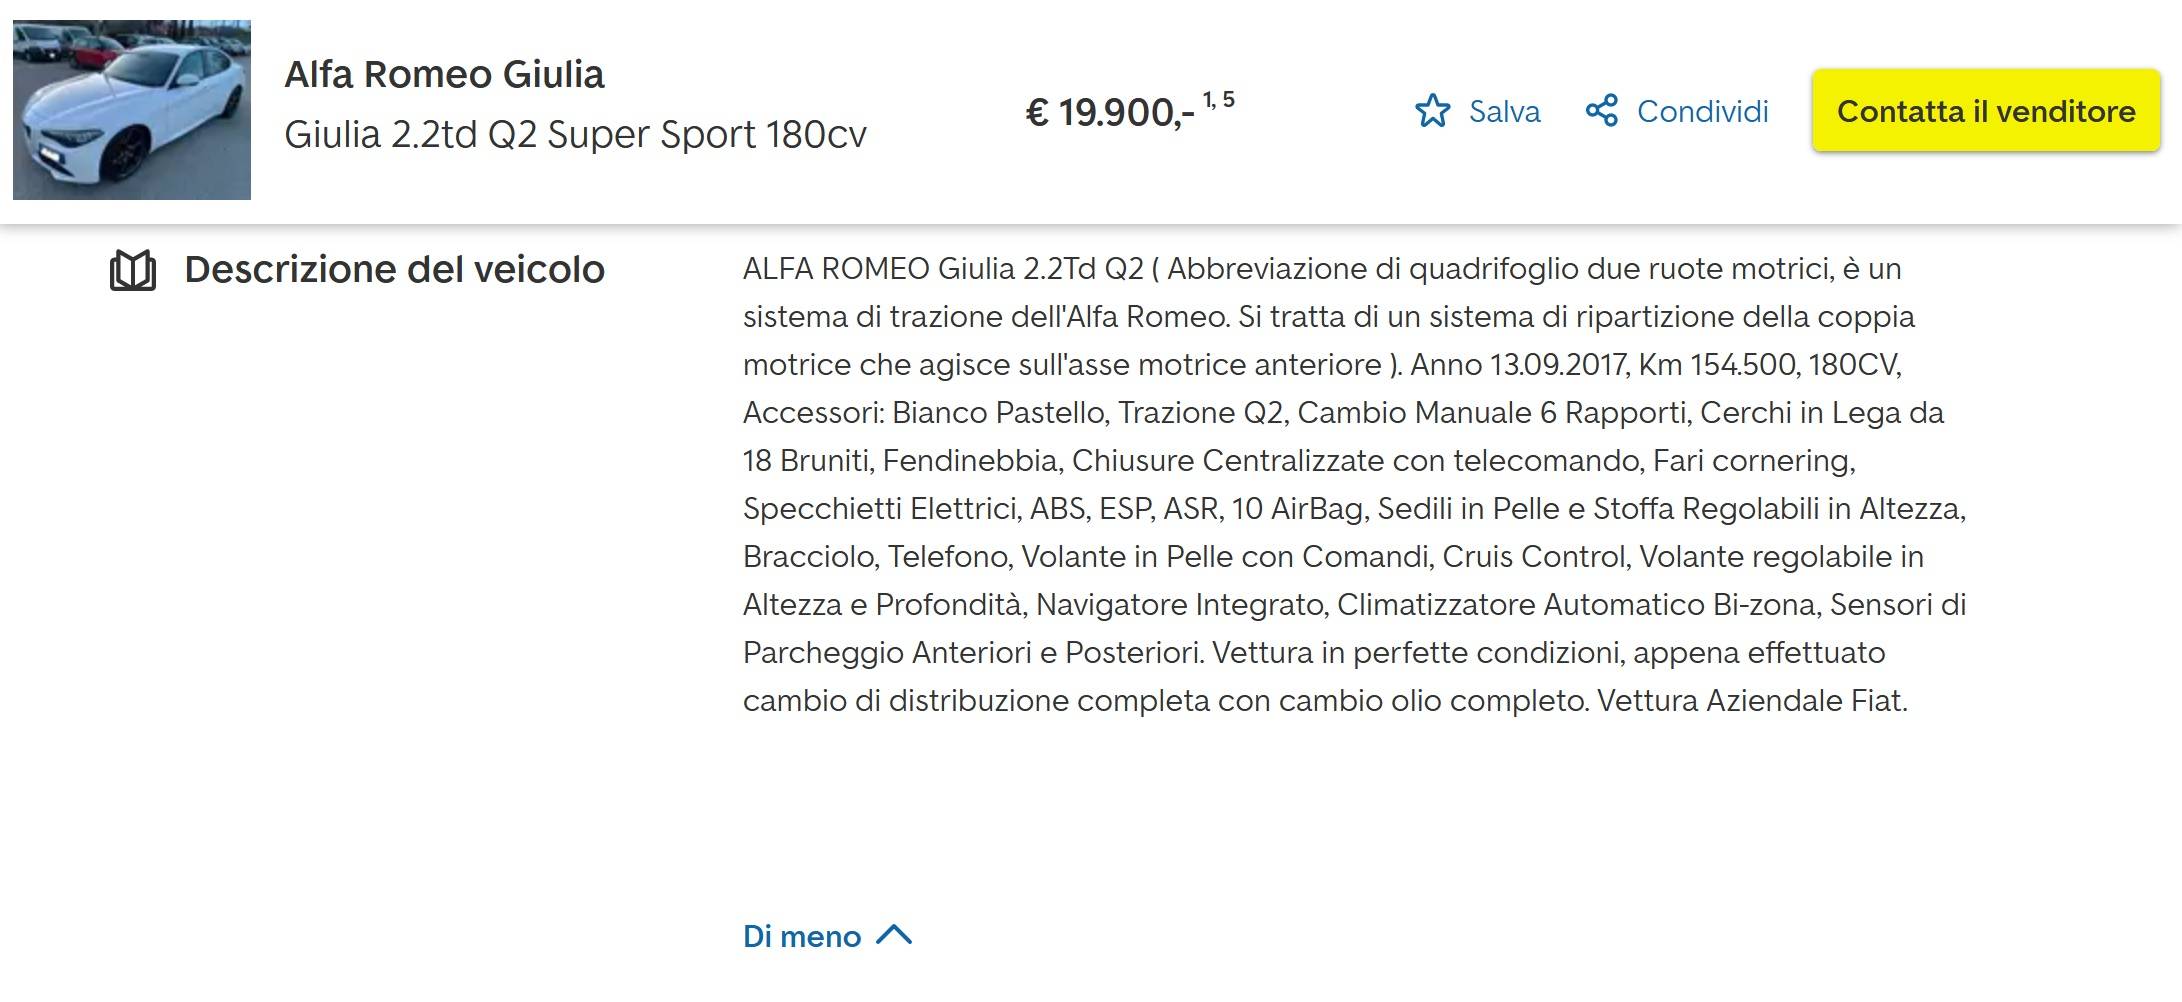 usato Alfa Romeo Giulia Berlina a Grottaminarda - Av per € 19.900,- – Mozilla Firefox 15_03_20...jpg